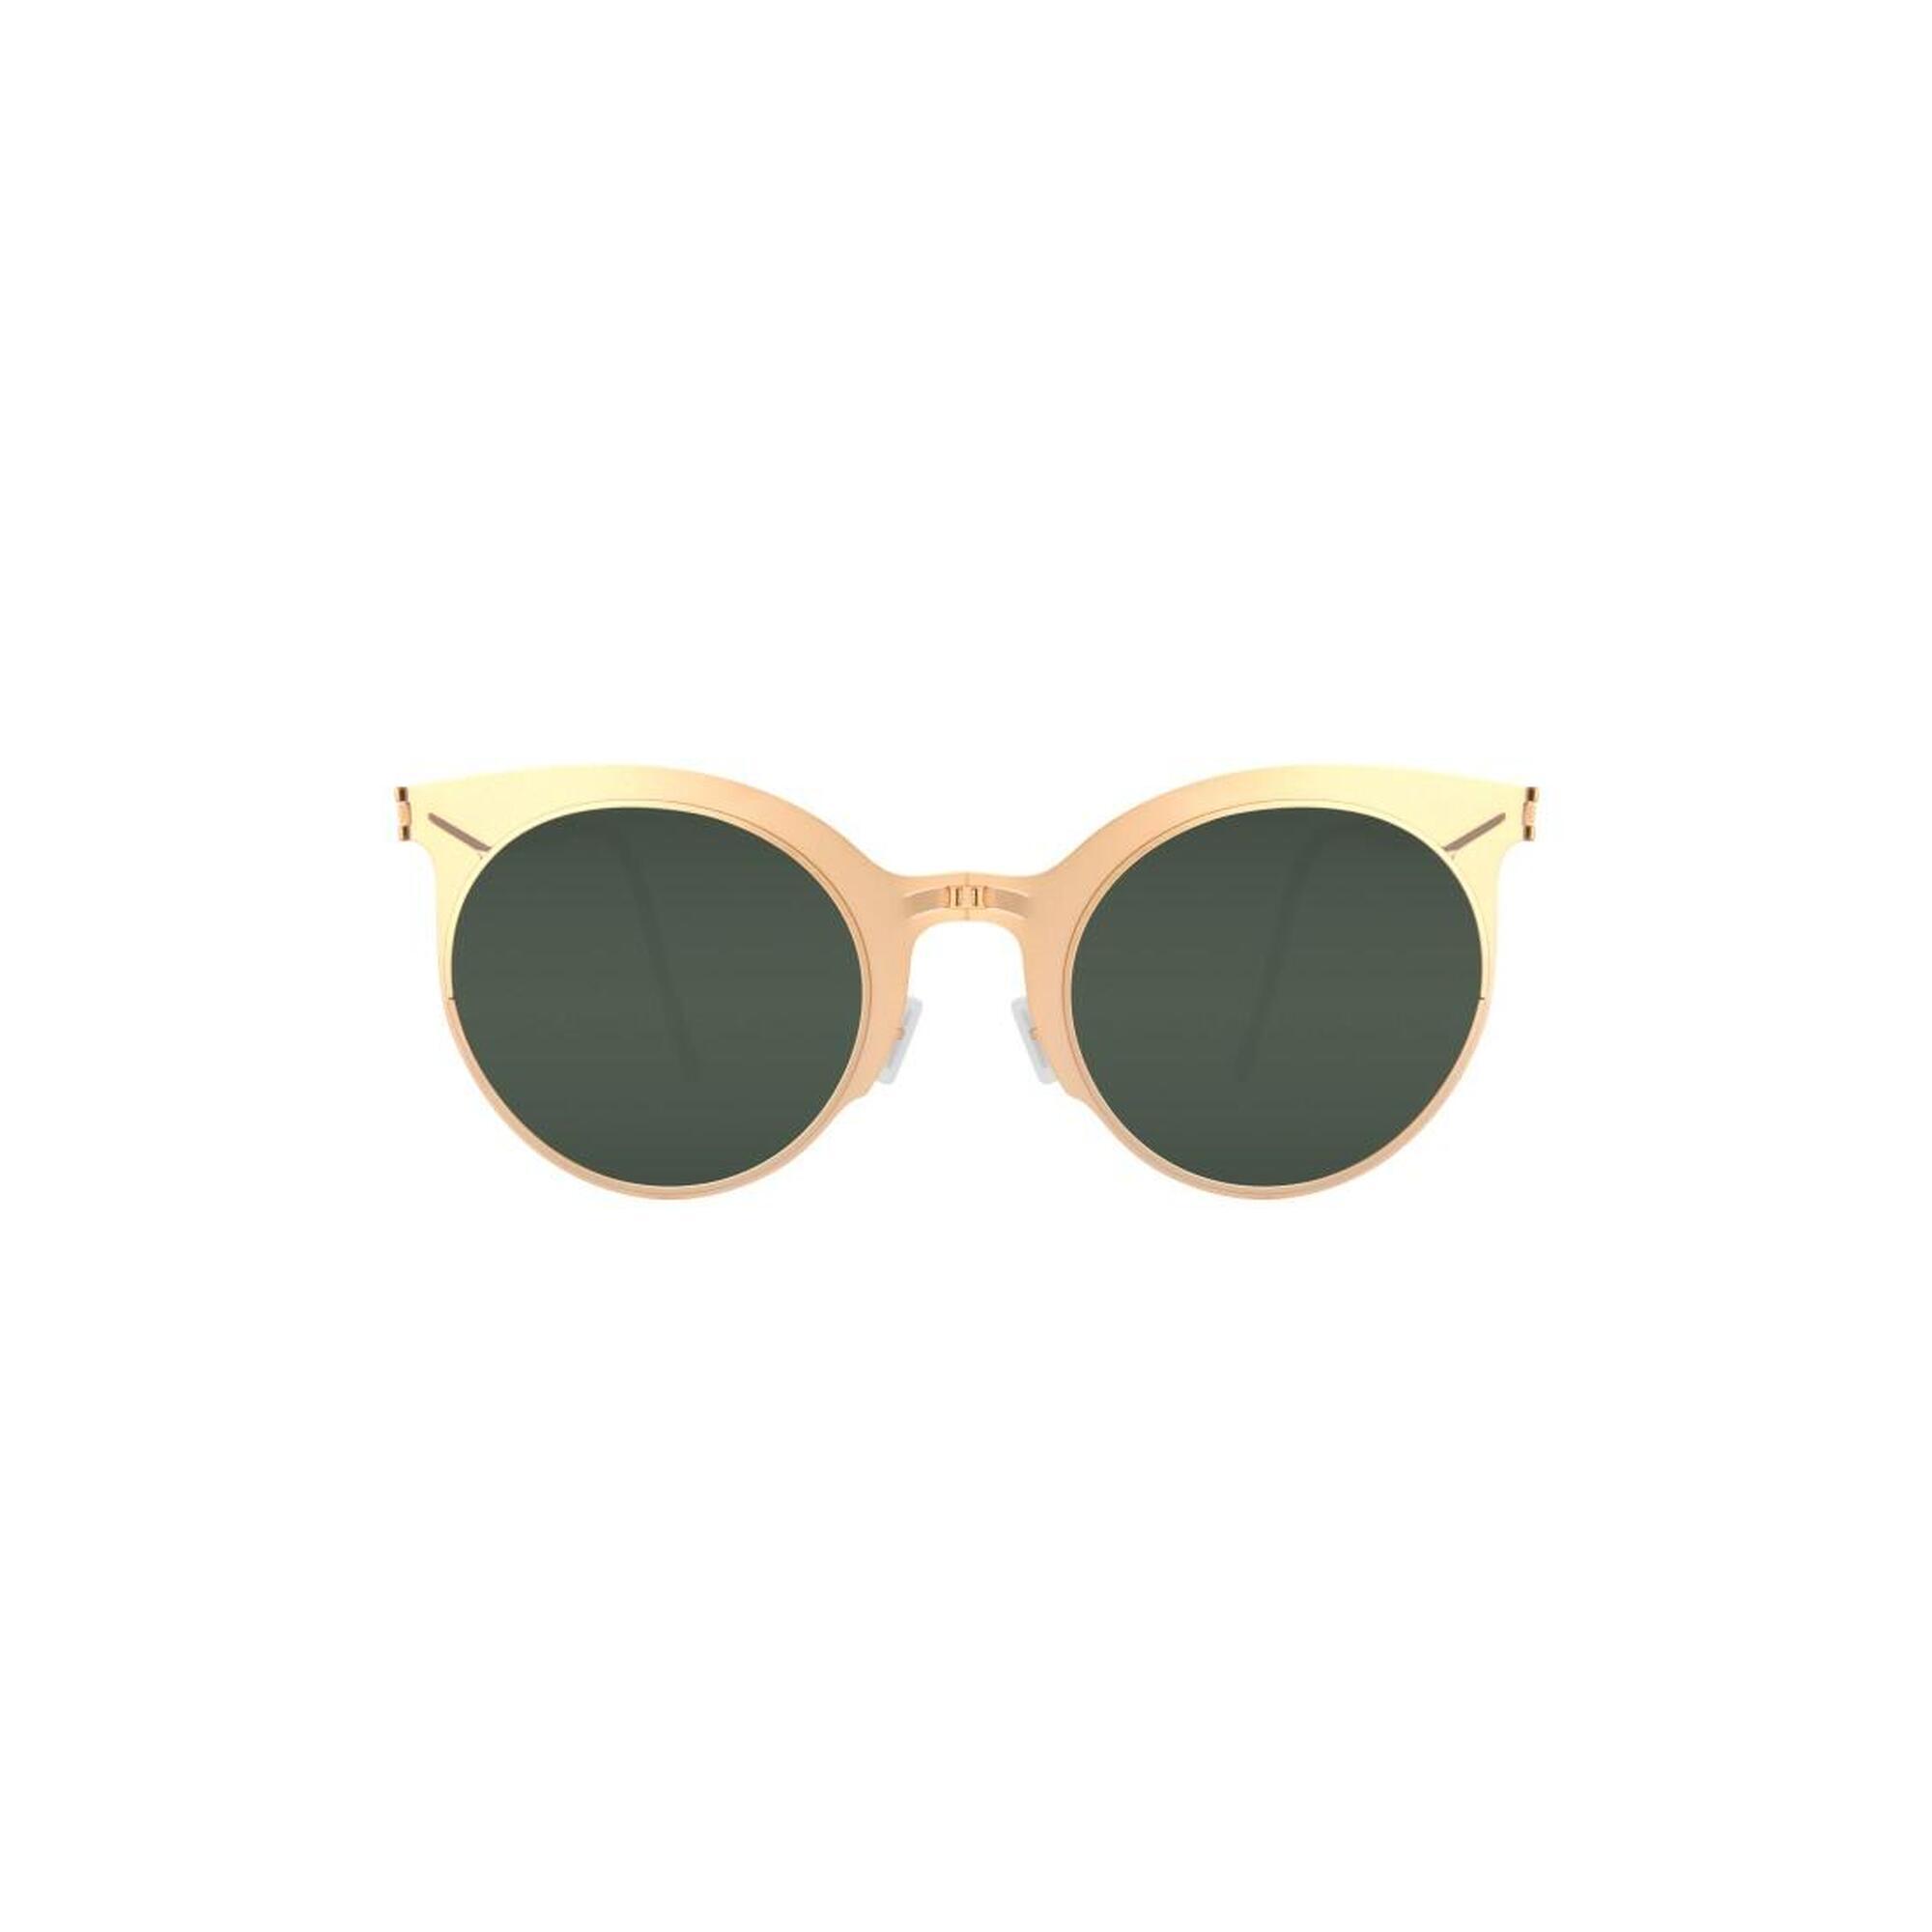 Zuma 8005 Adult Unisex Folding Sunglasses - Gold / Green